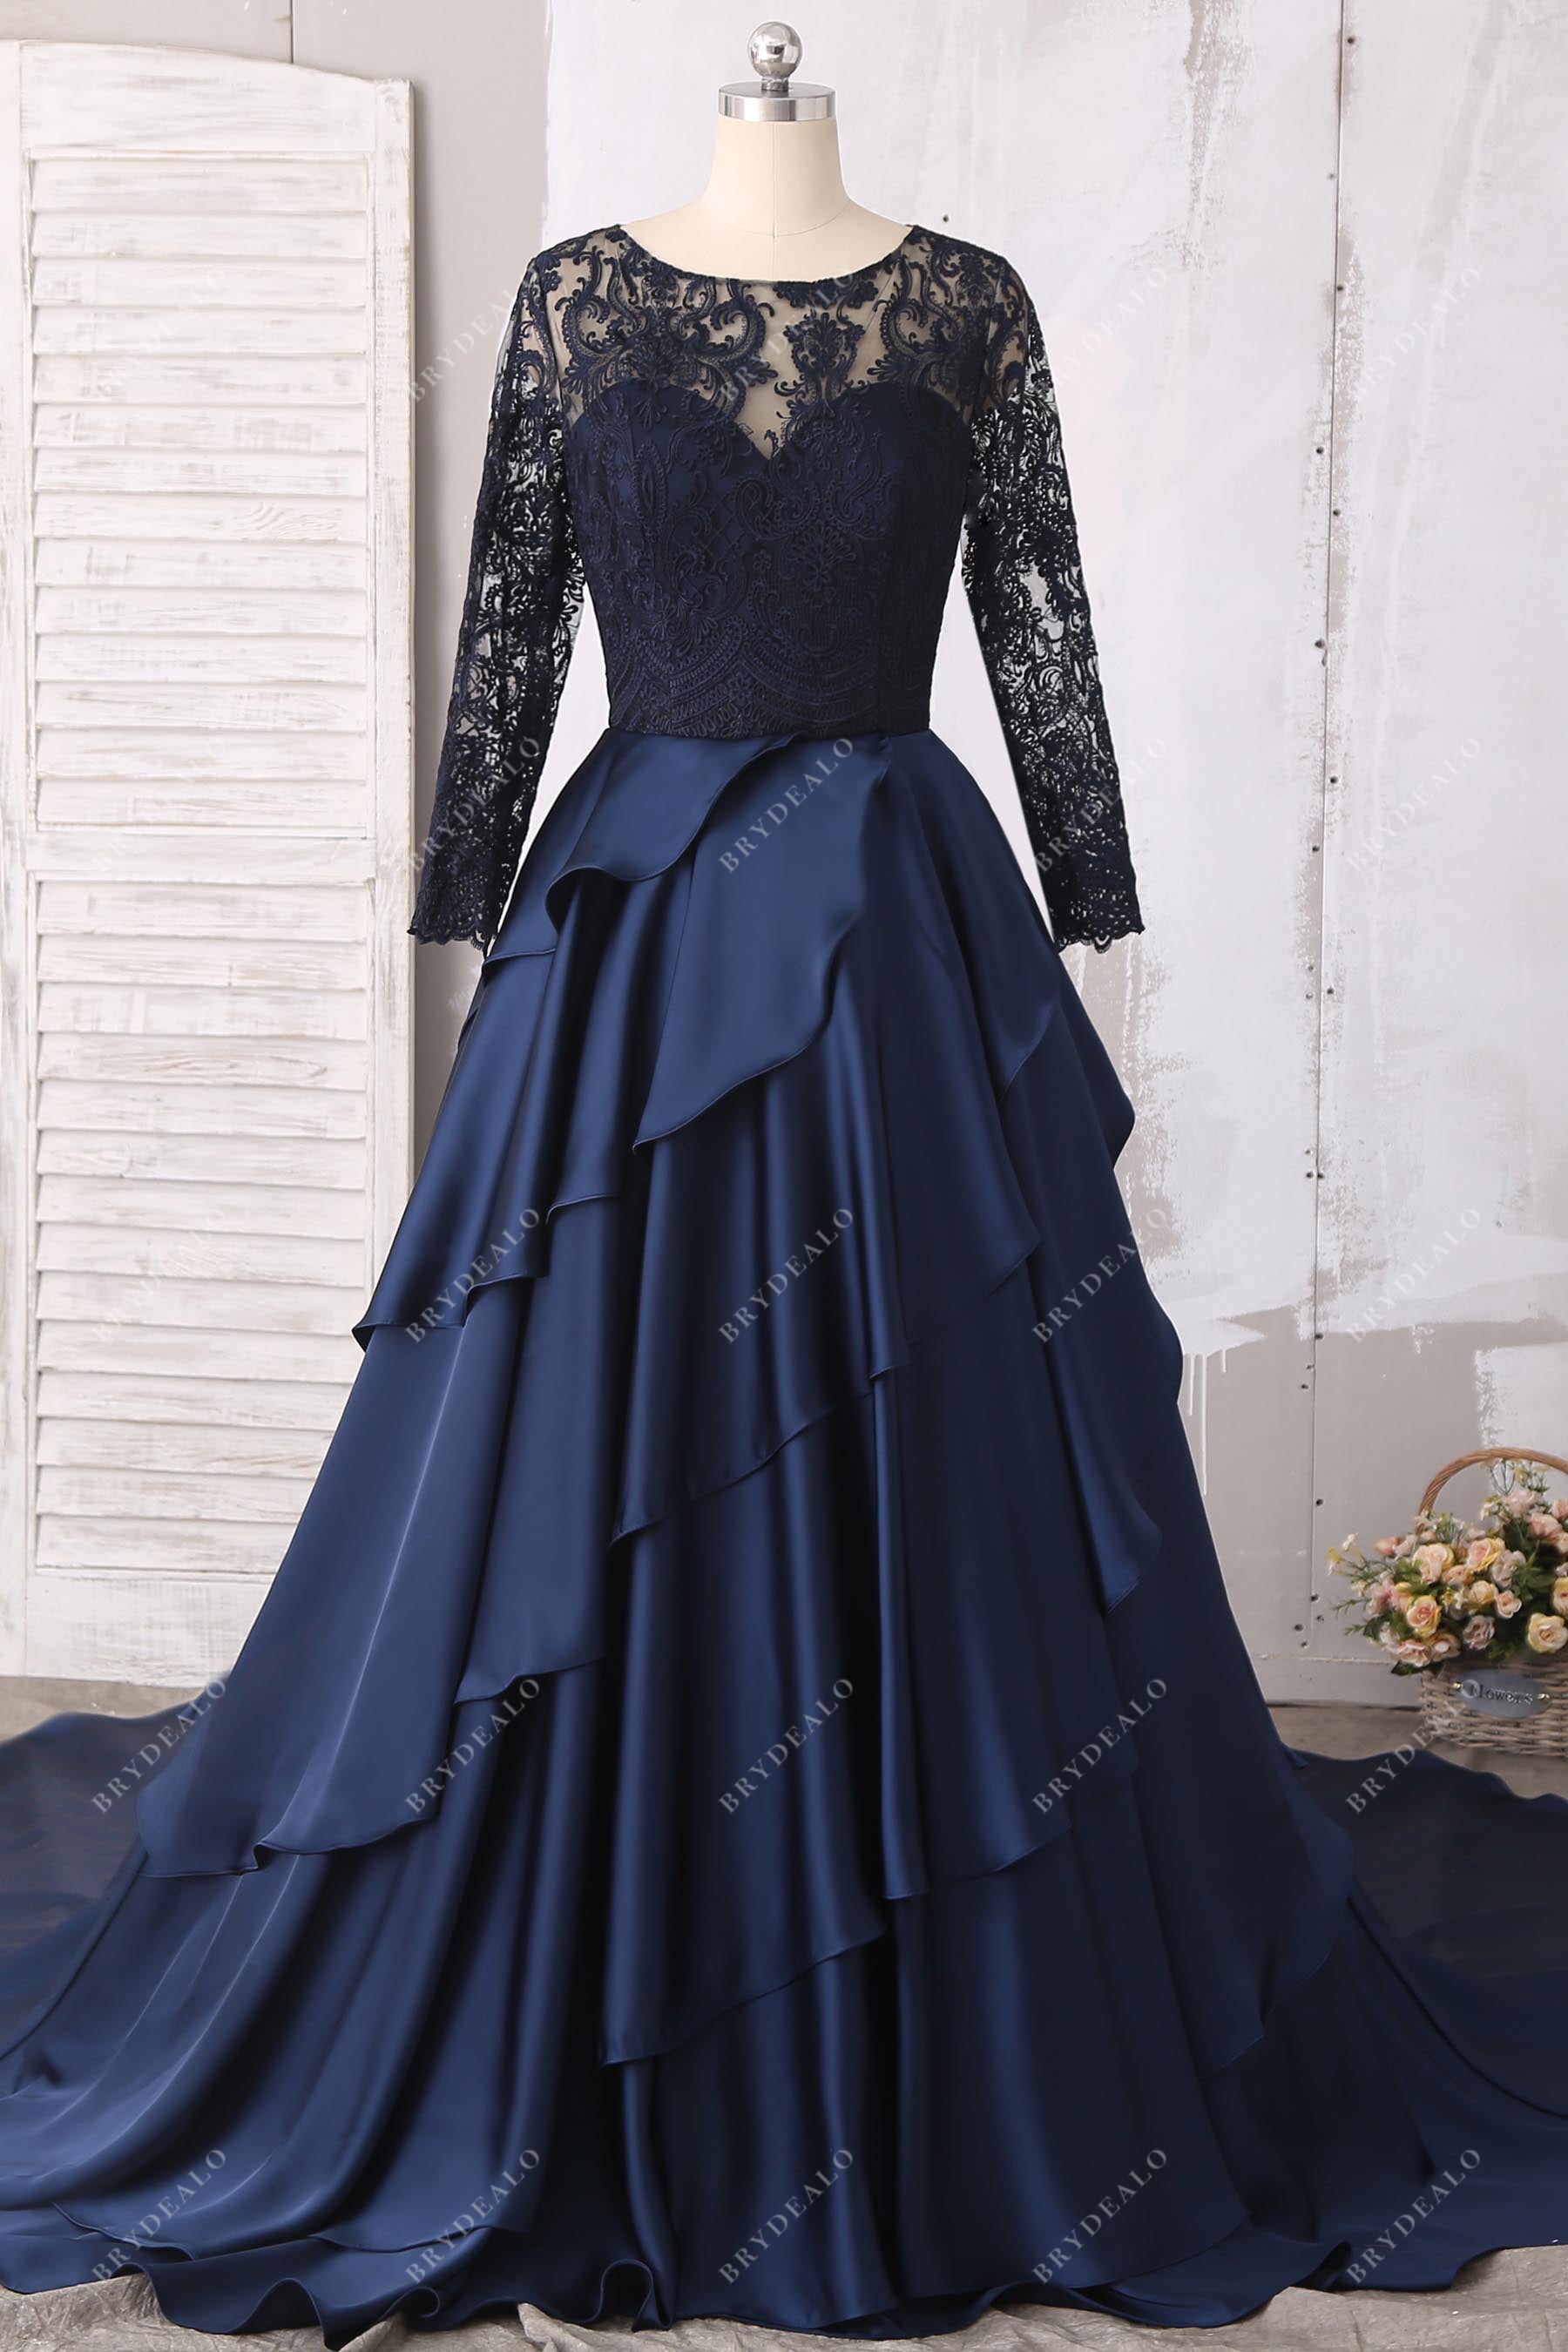 designer navy beaded lace ruffled satin ball gown wedding dress